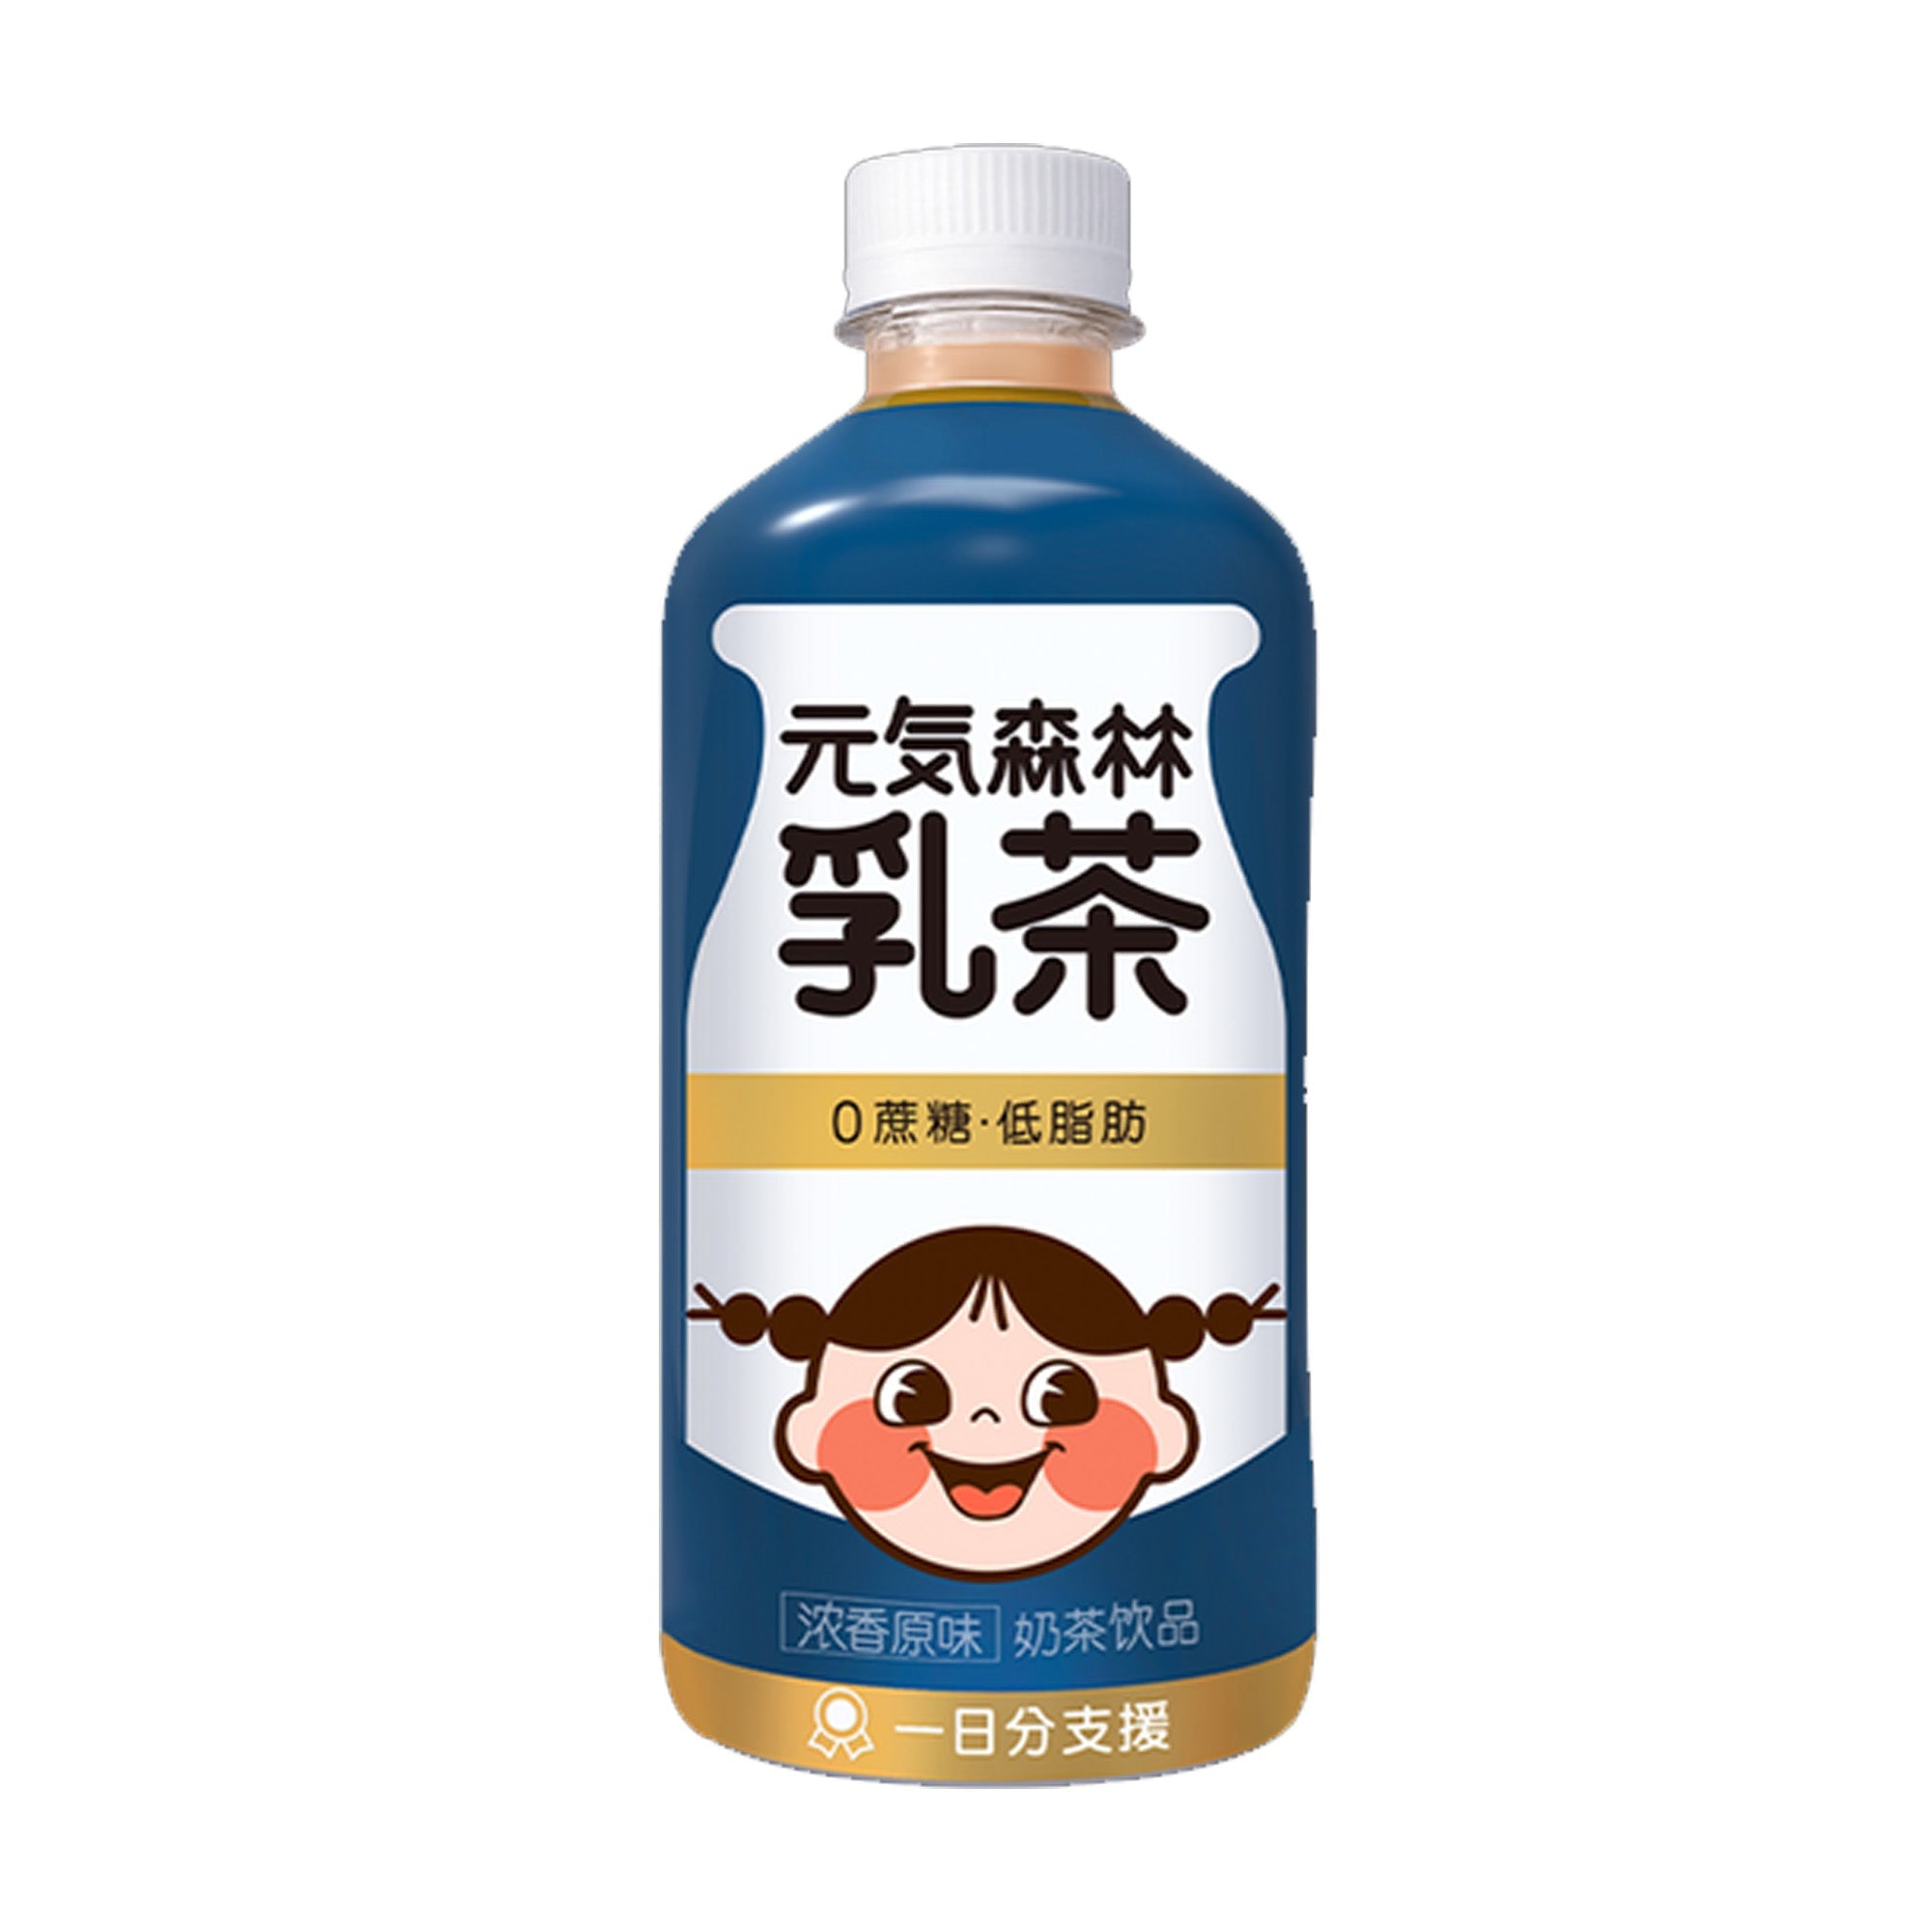 元气森林乳茶原味 genki Forest Milk Tea Drink Original flavor 450ml